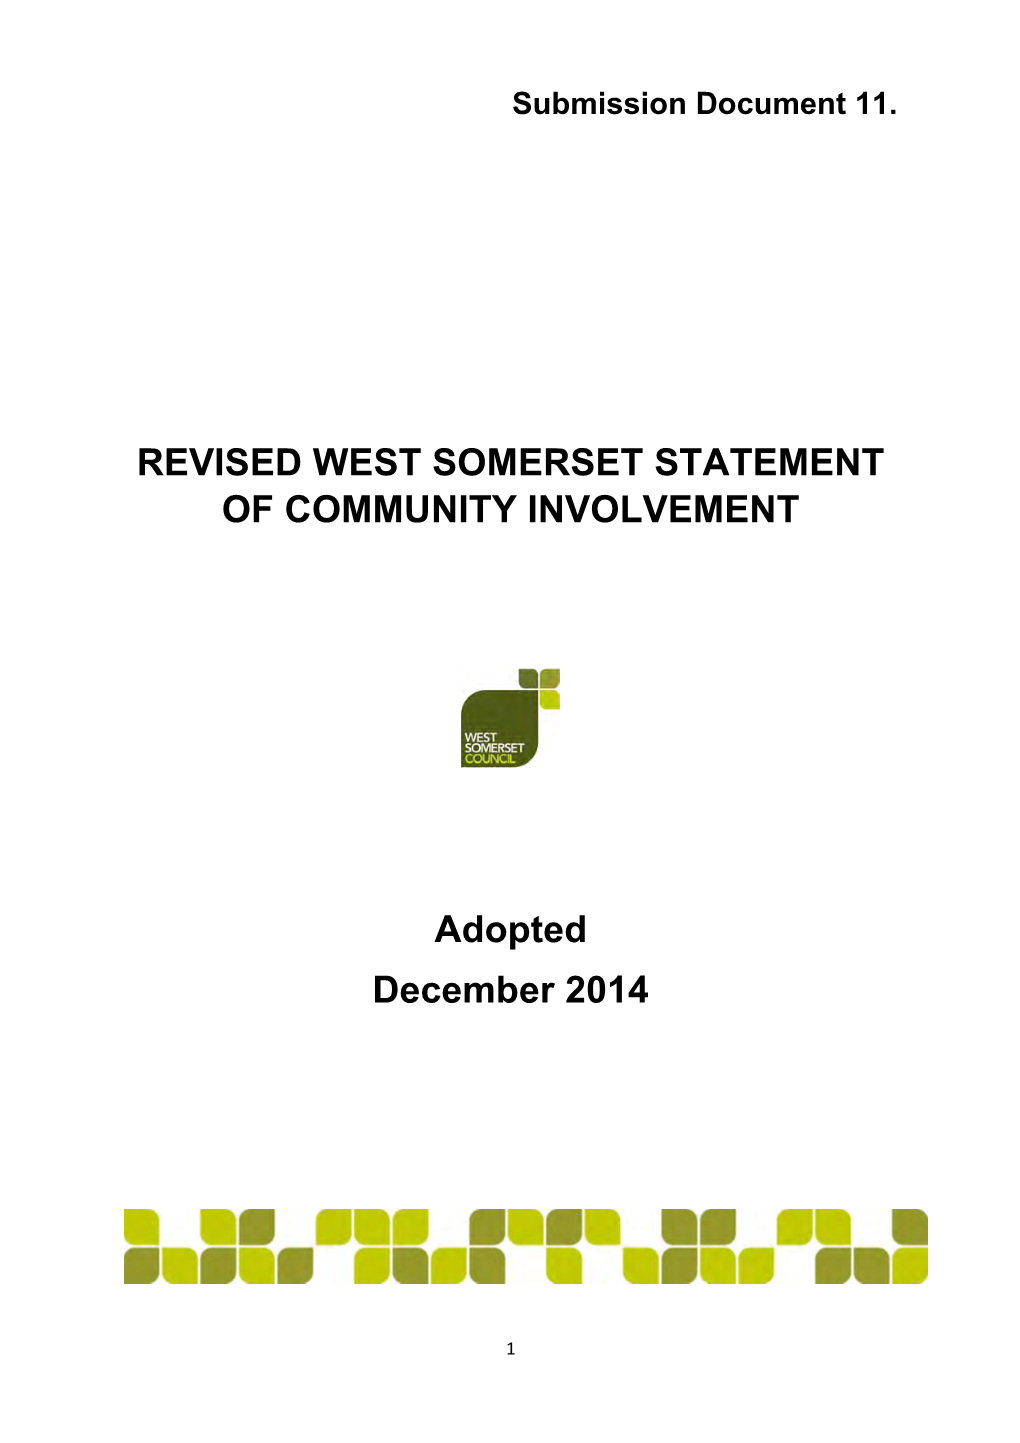 Revised West Somerset Statement of Community Involvement 2014